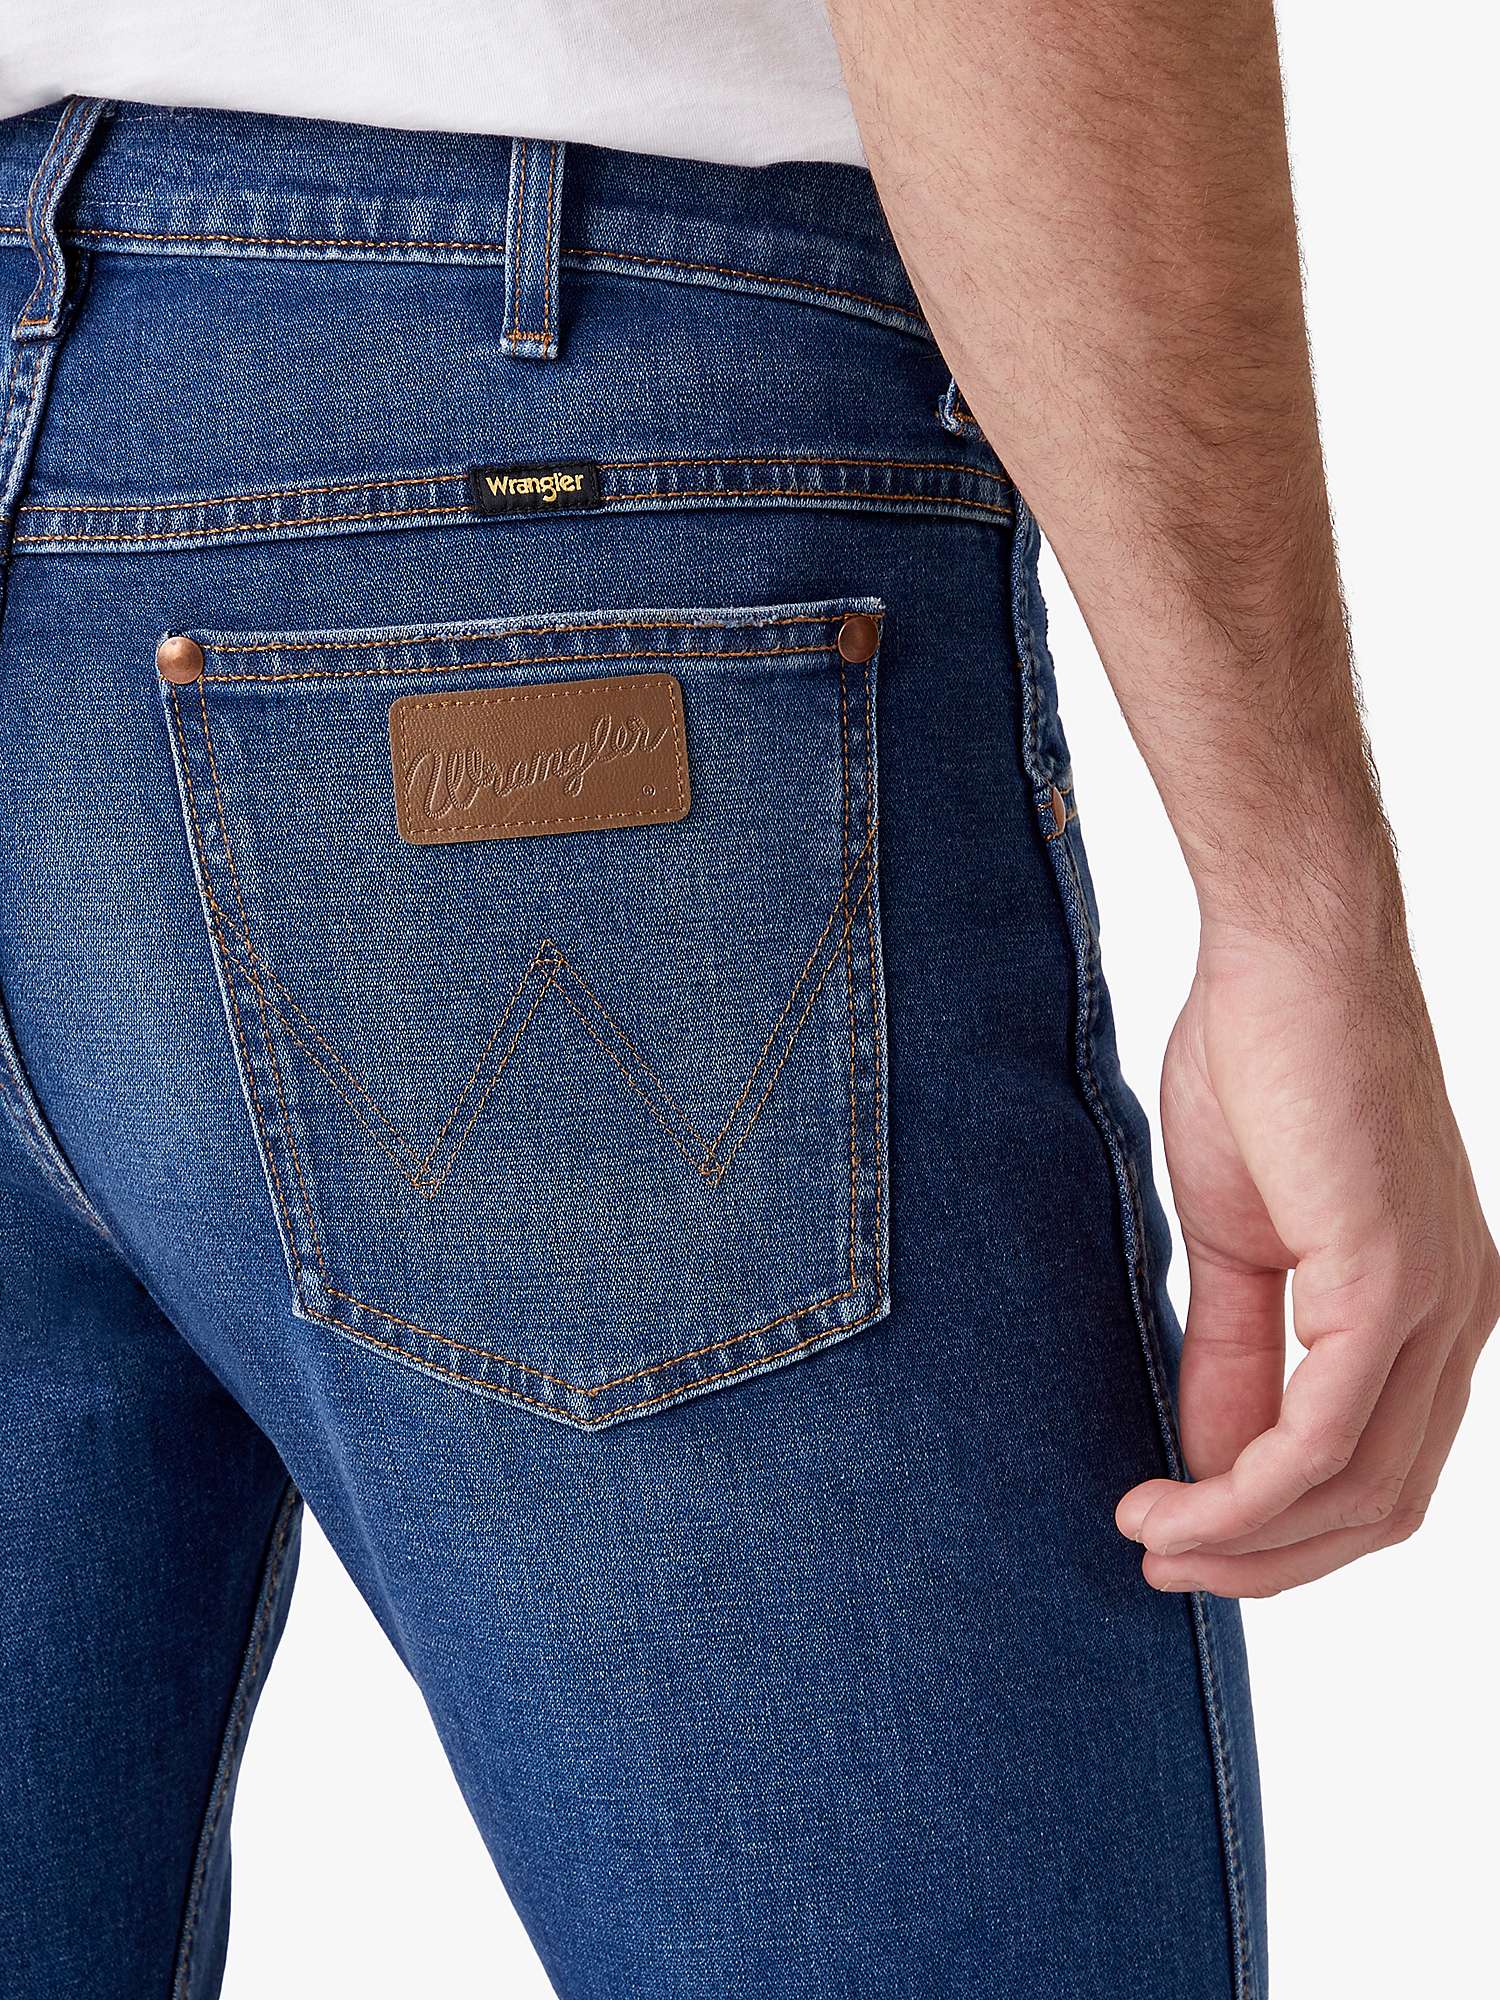 Wrangler Slim Fit Jeans, Blue at John Lewis & Partners